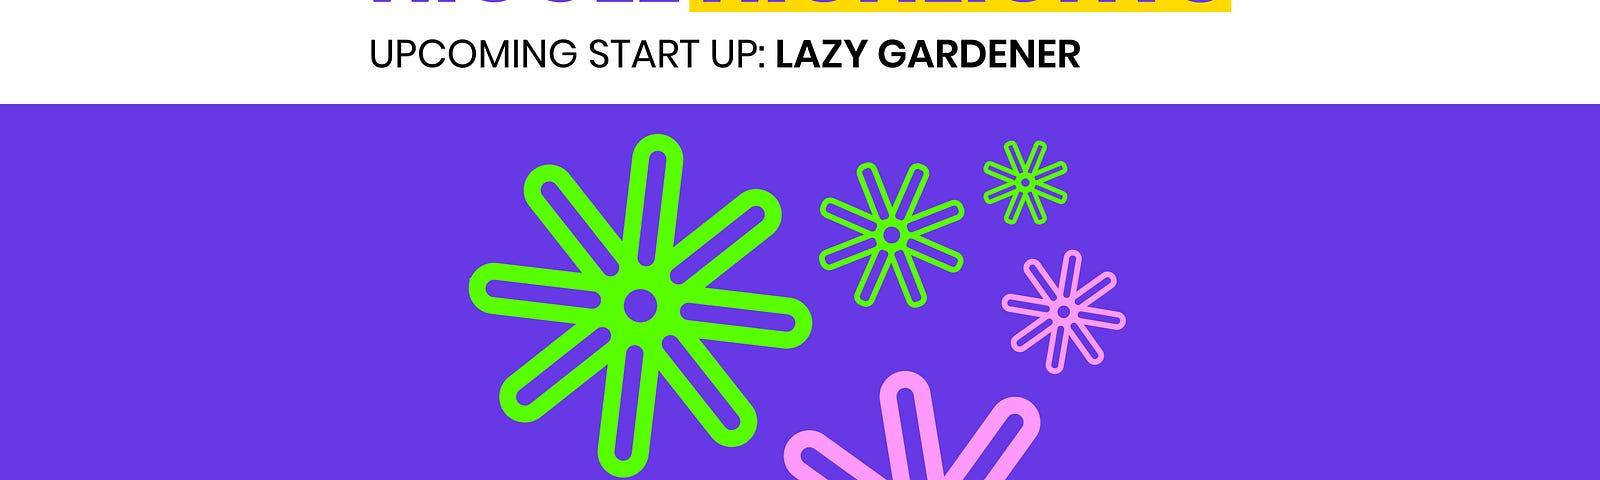 Gardening Startup LazyGardener